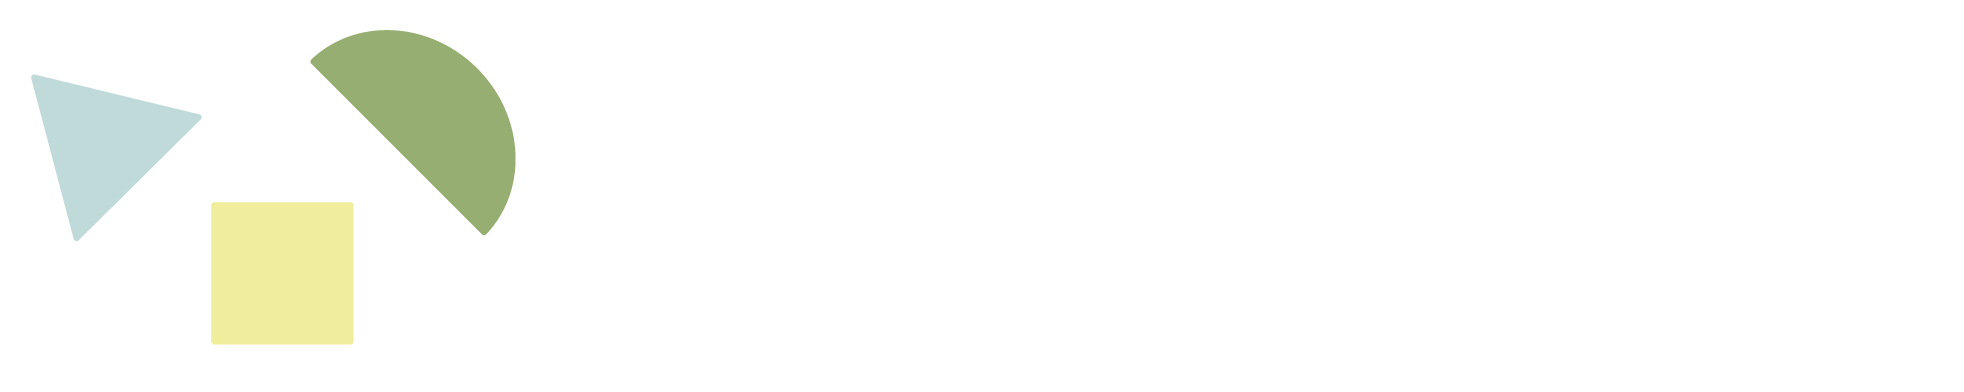 Kita Traeger Logo